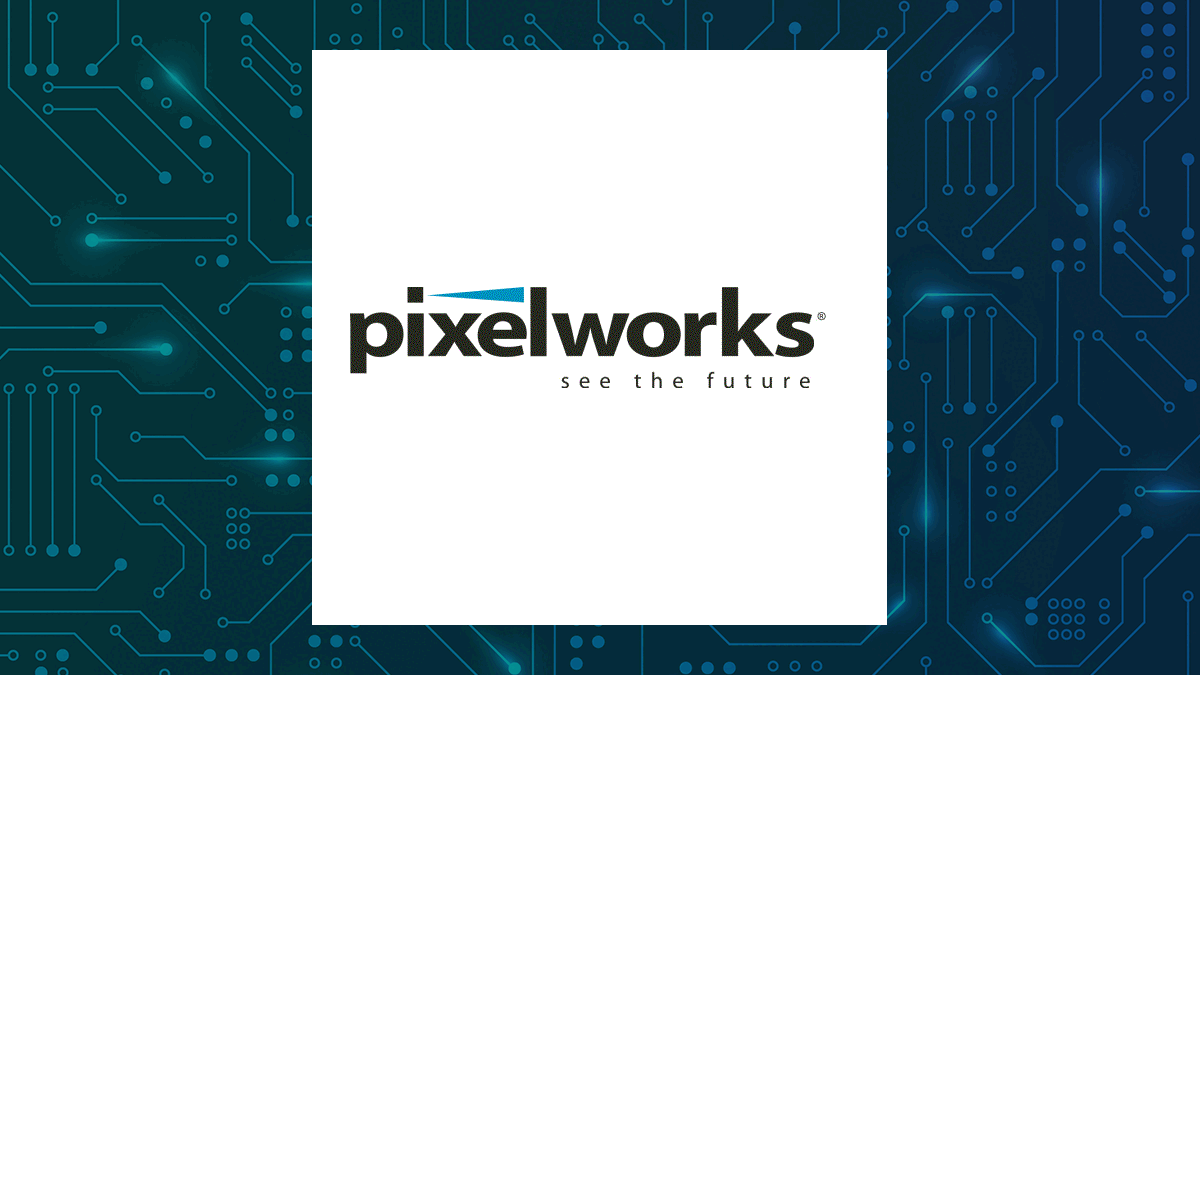 Pixelworks logo